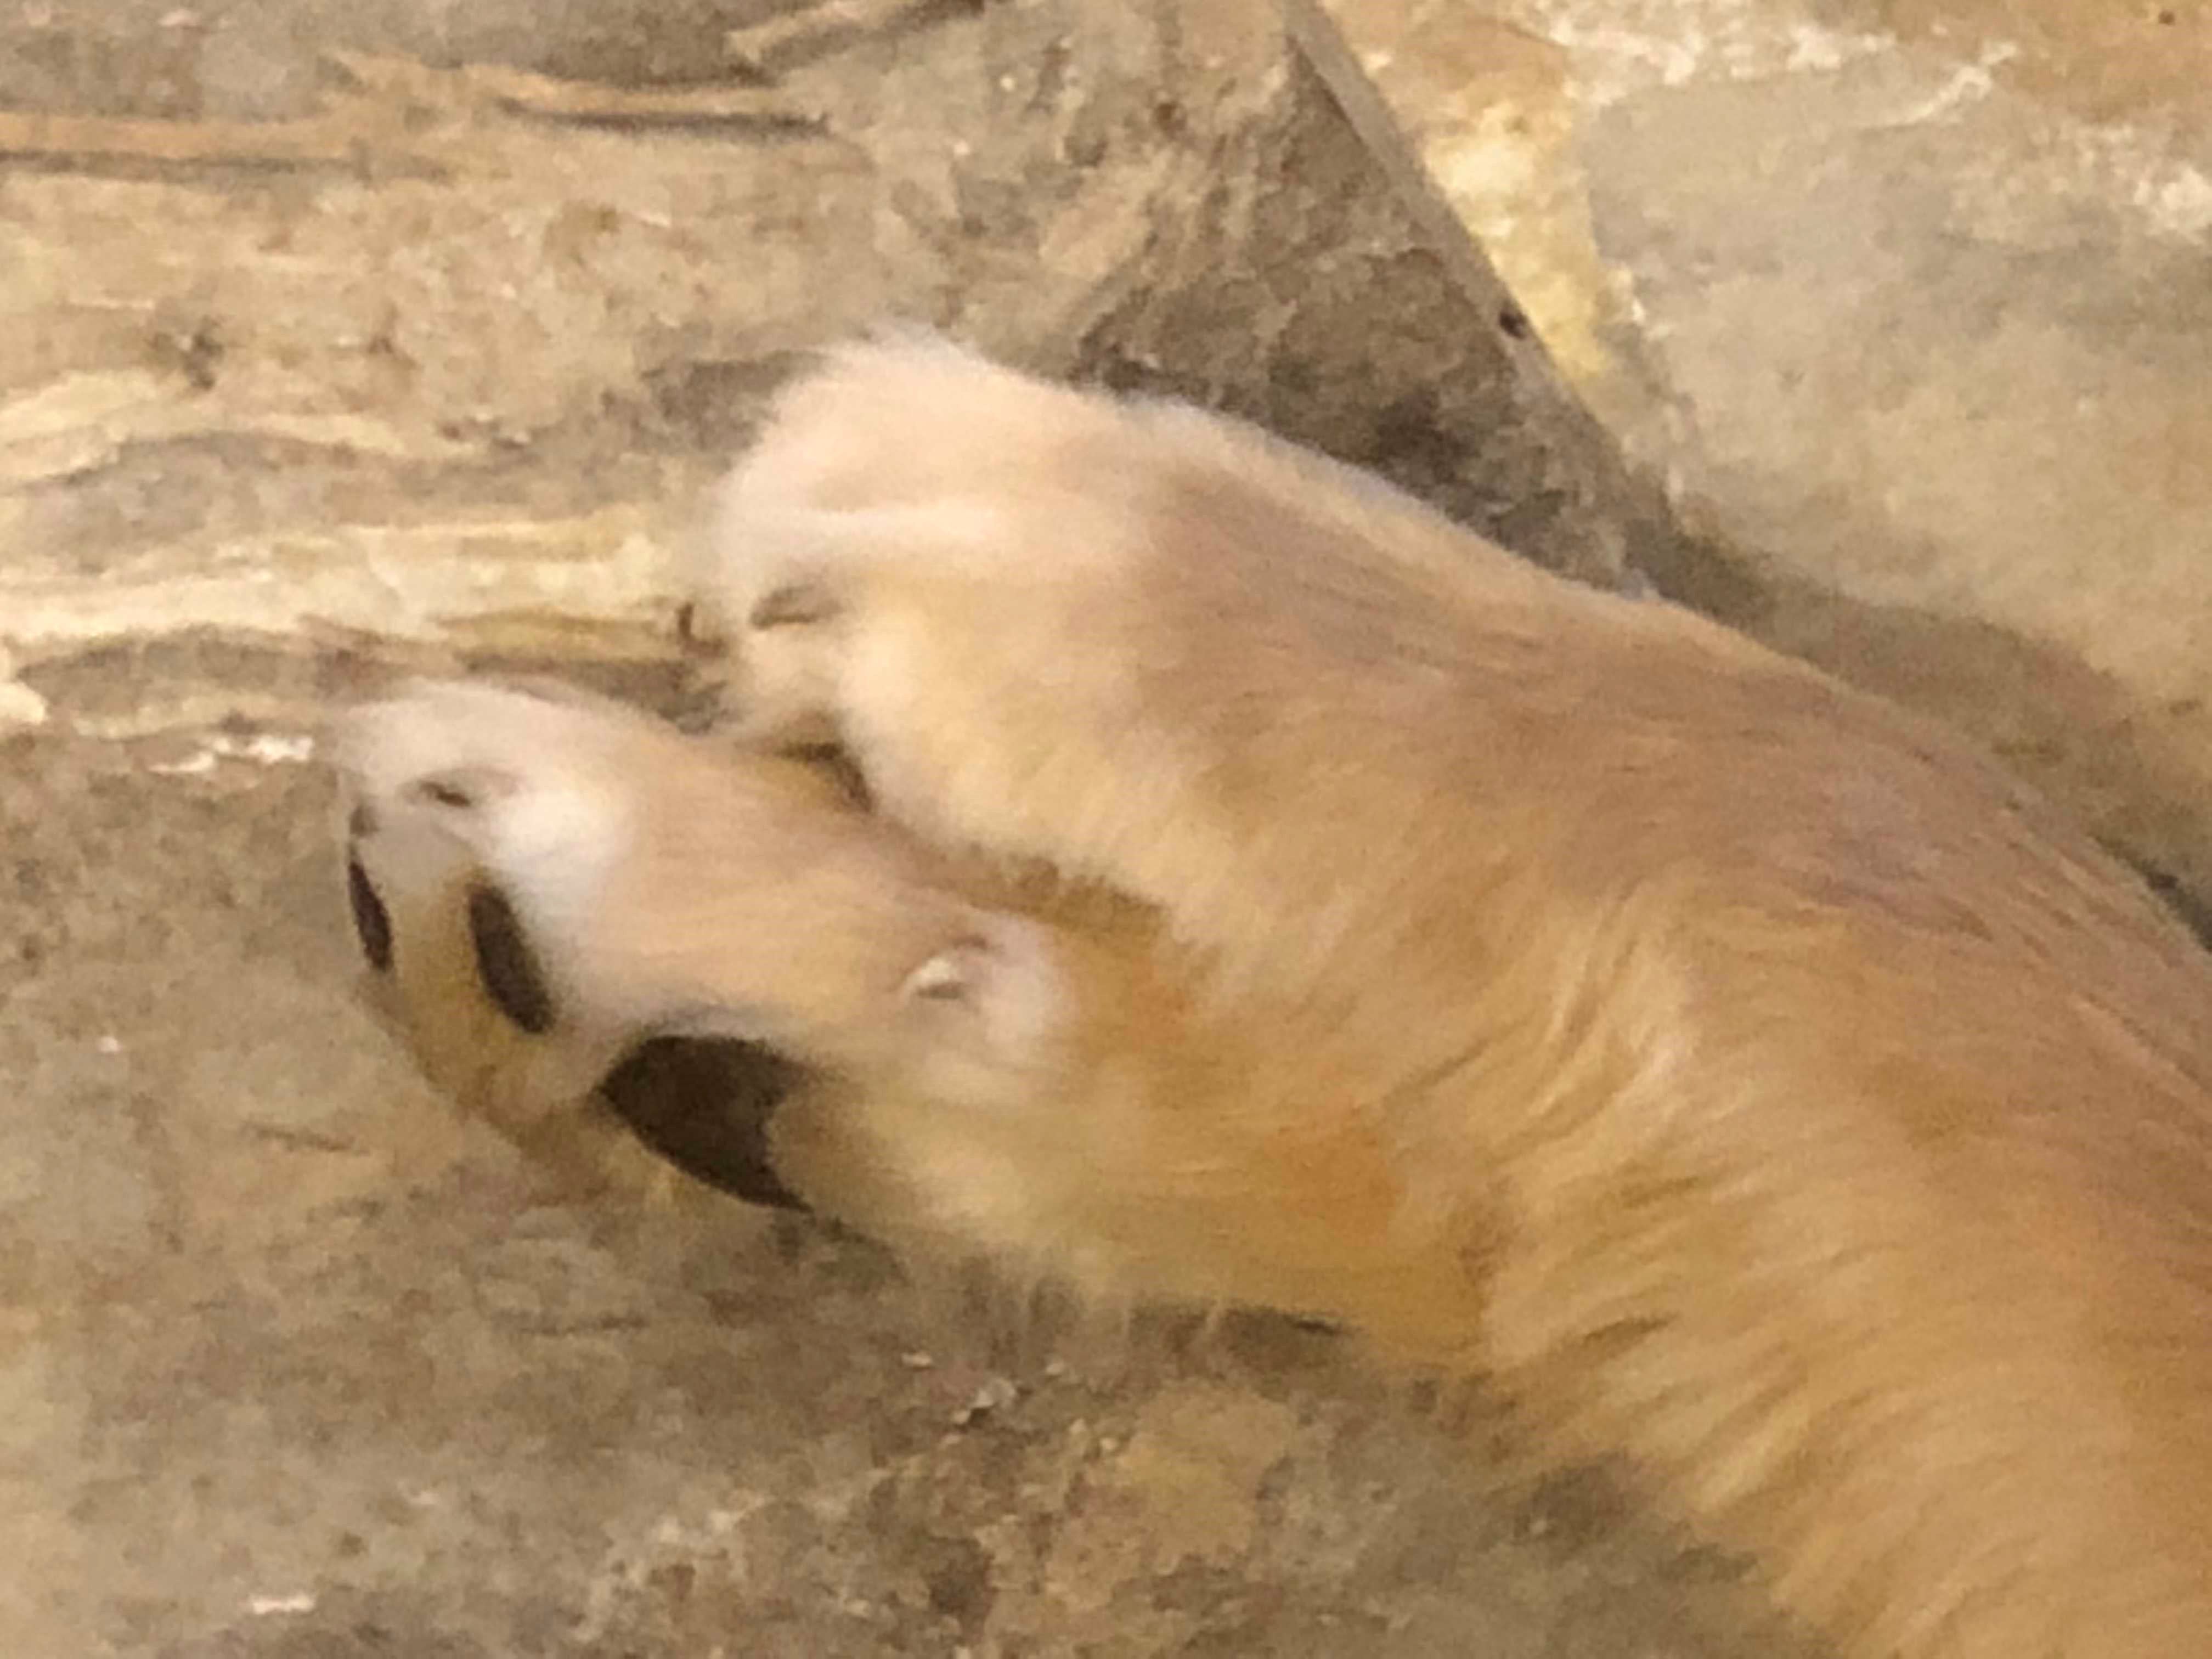 2 dog paws